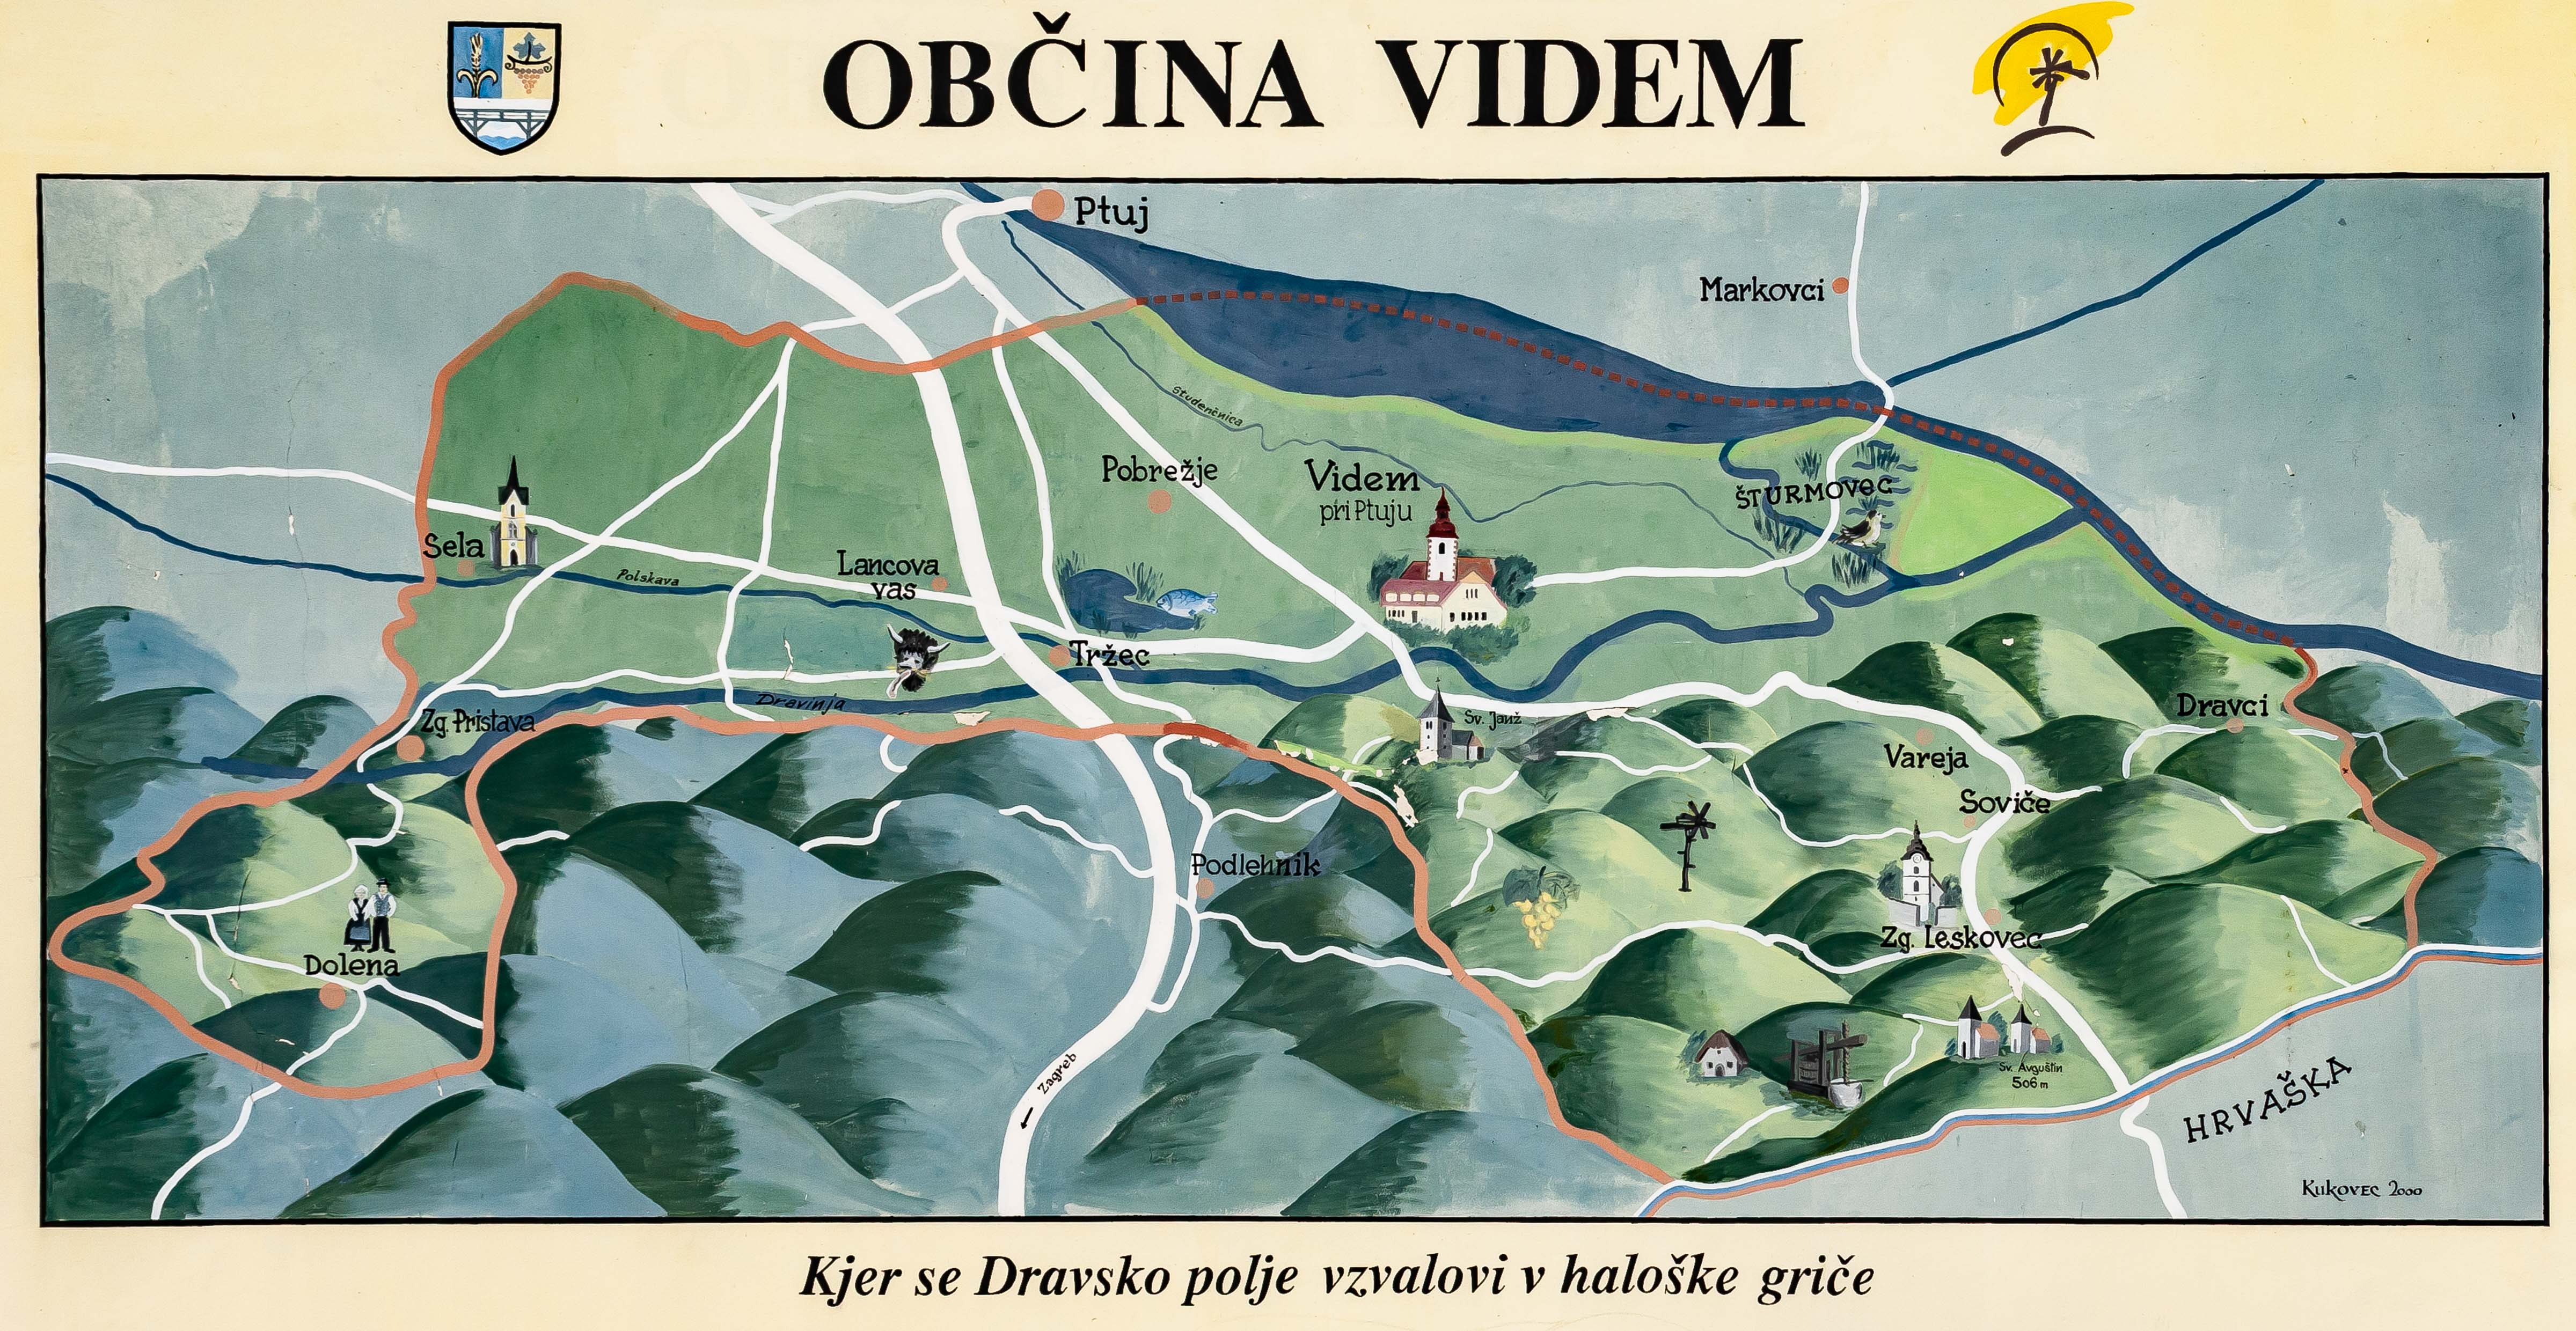 Slovenia, Videm Prov, Obcina Videm, 2006, IMG 5464